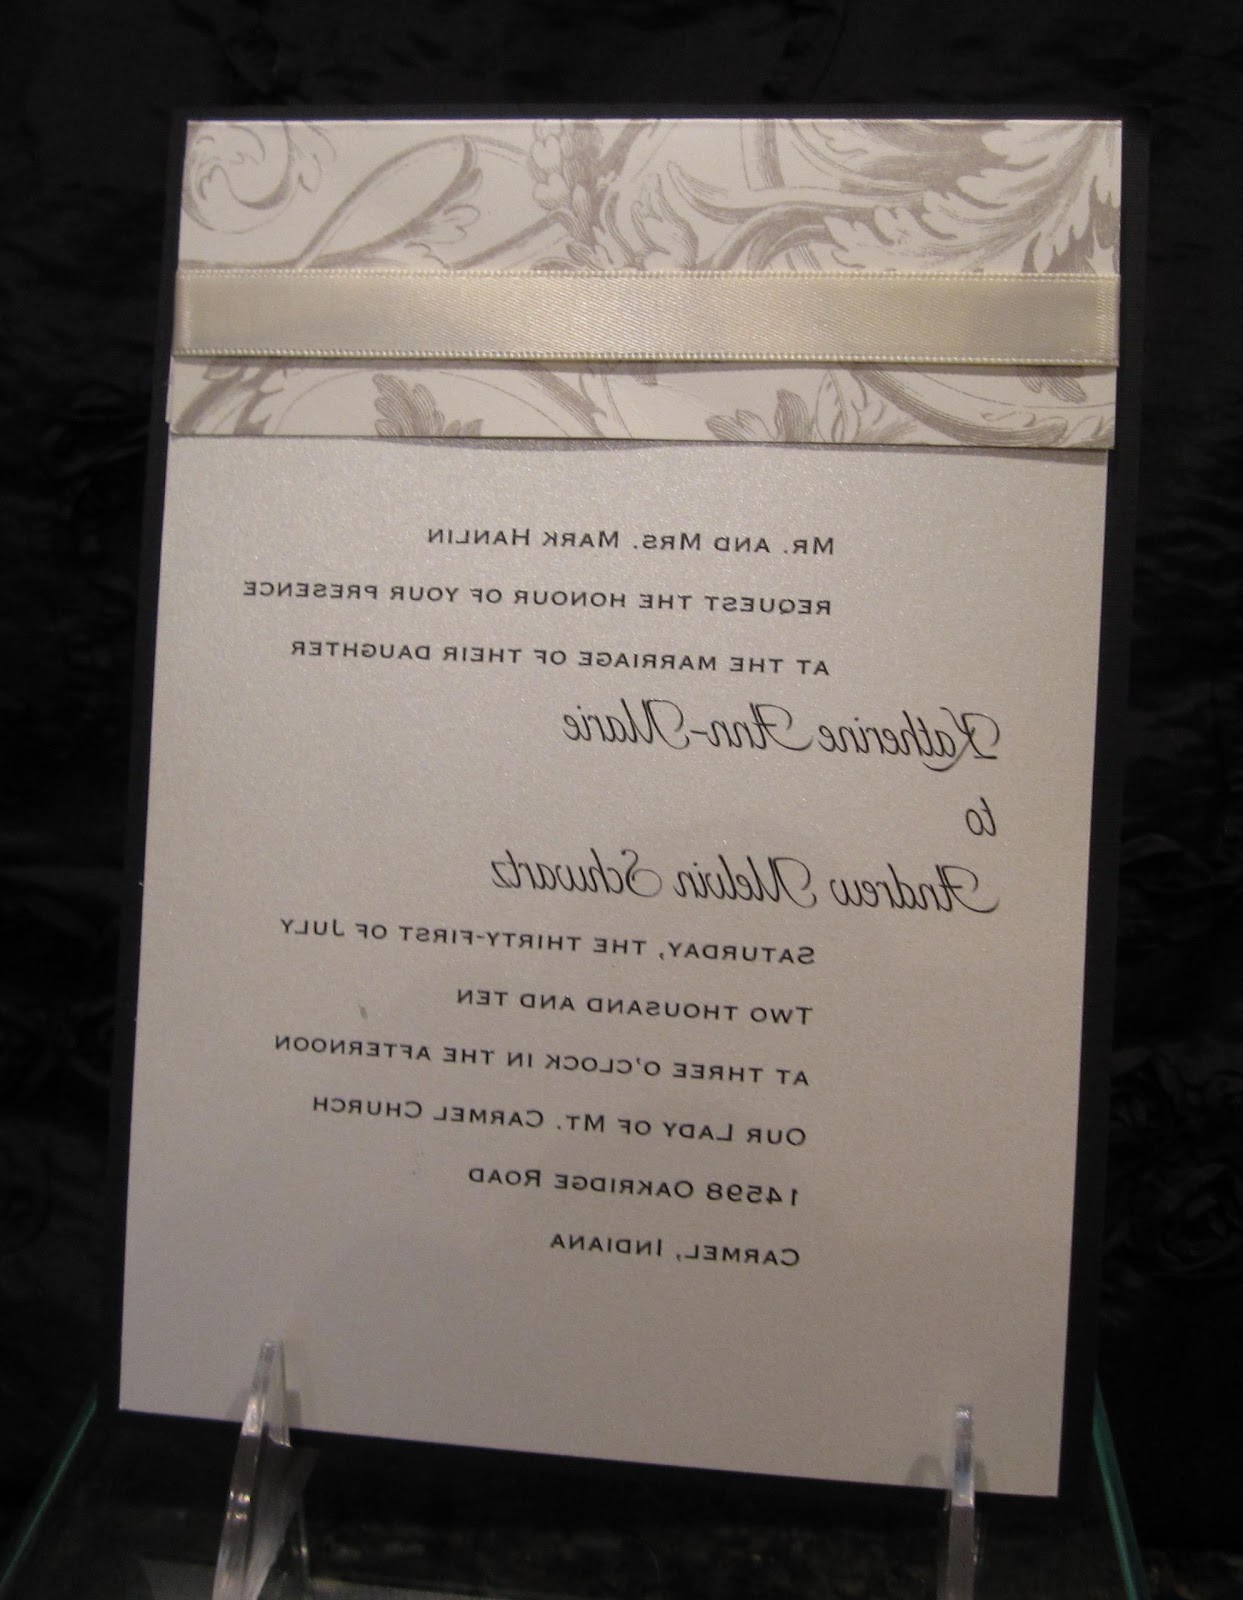 for wedding invitations.